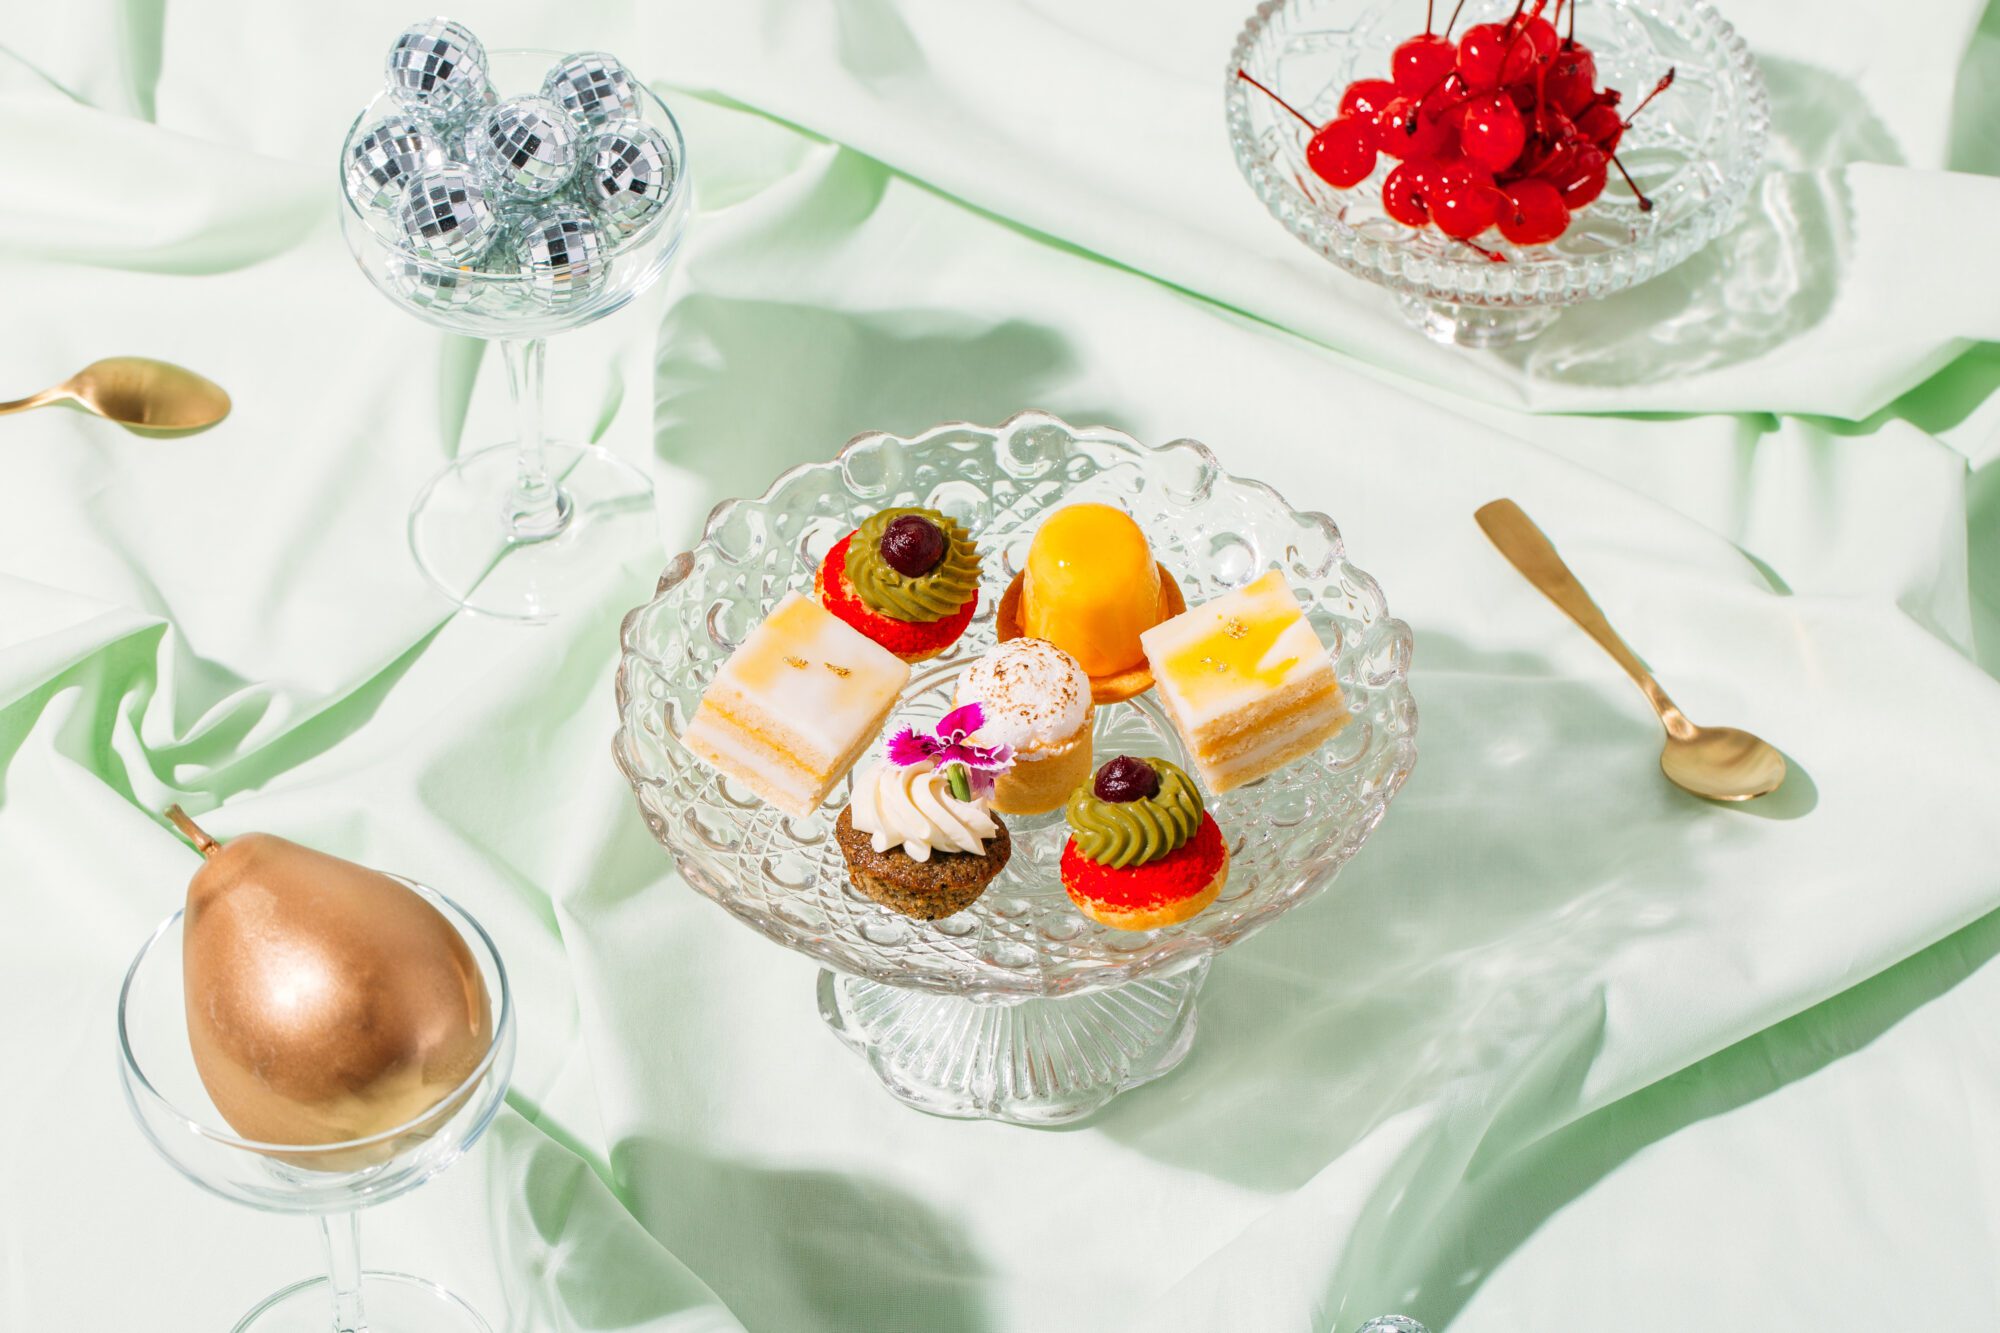 Head along to Naumi Wellington for a ‘feast for the senses’ high tea experience